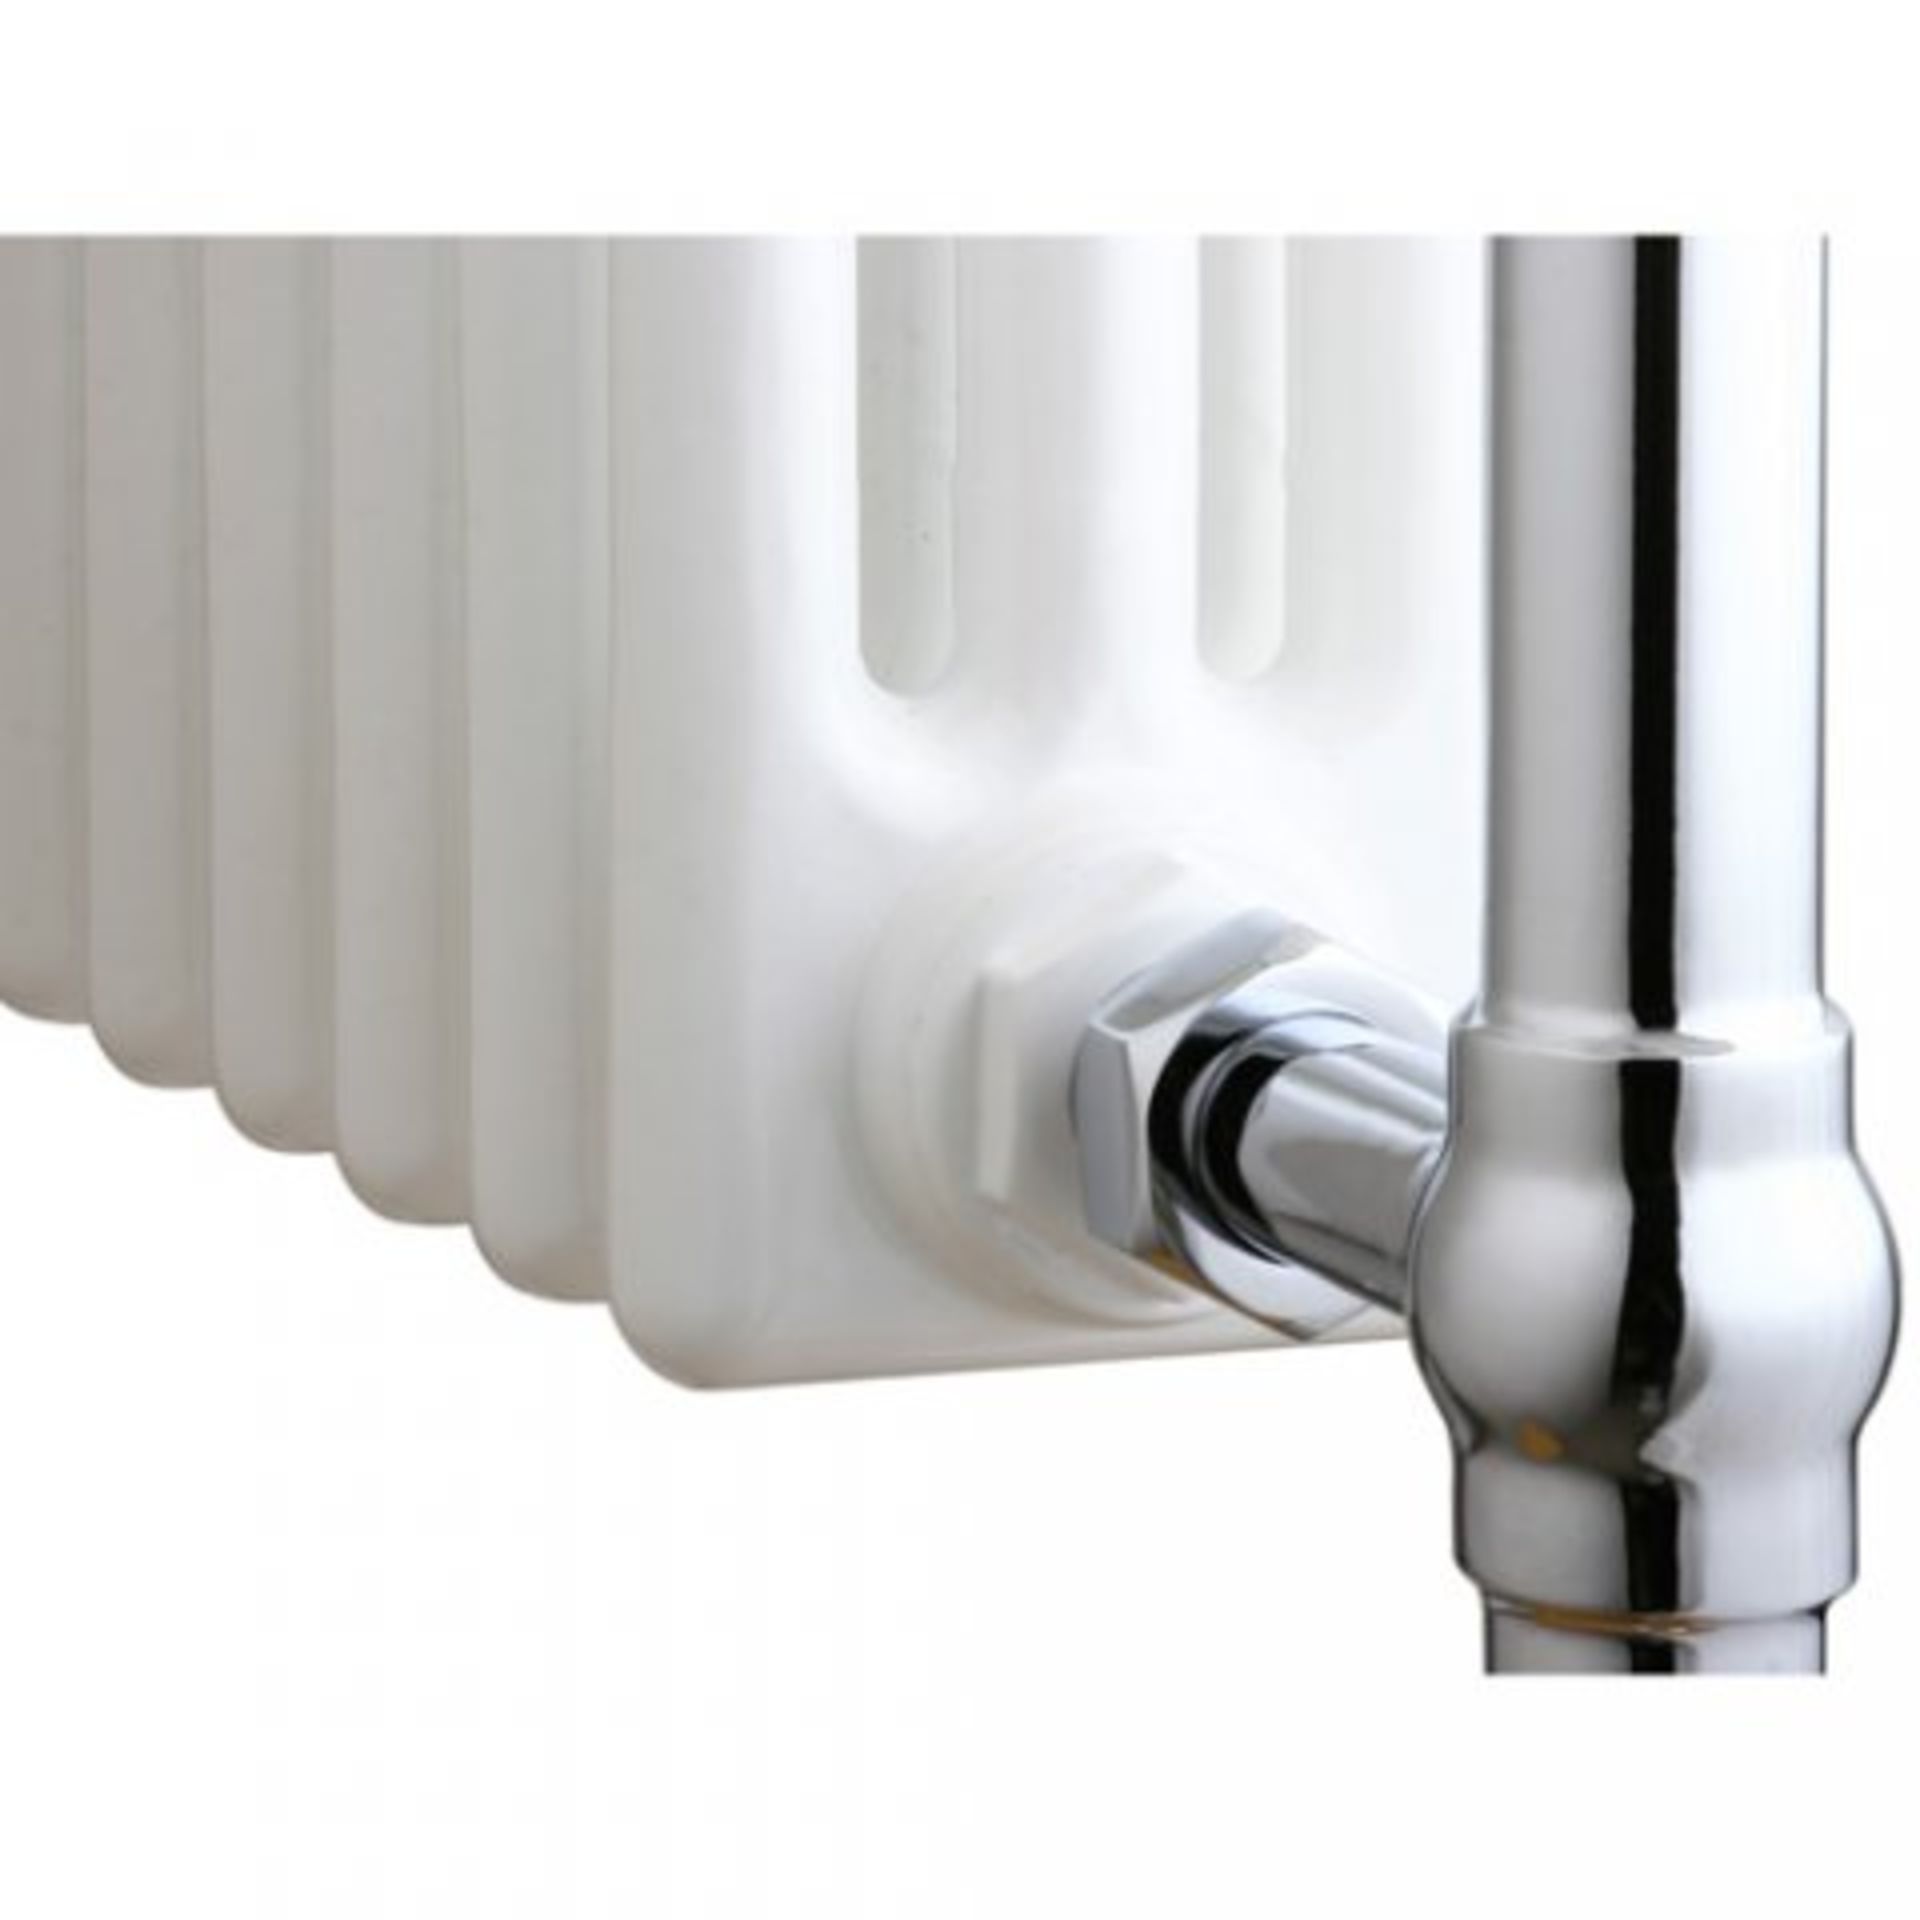 (M14) 952x659mm Large Traditional White Towel Rail Radiator - Victoria Premium. RRP £341.99. Long - Image 4 of 5